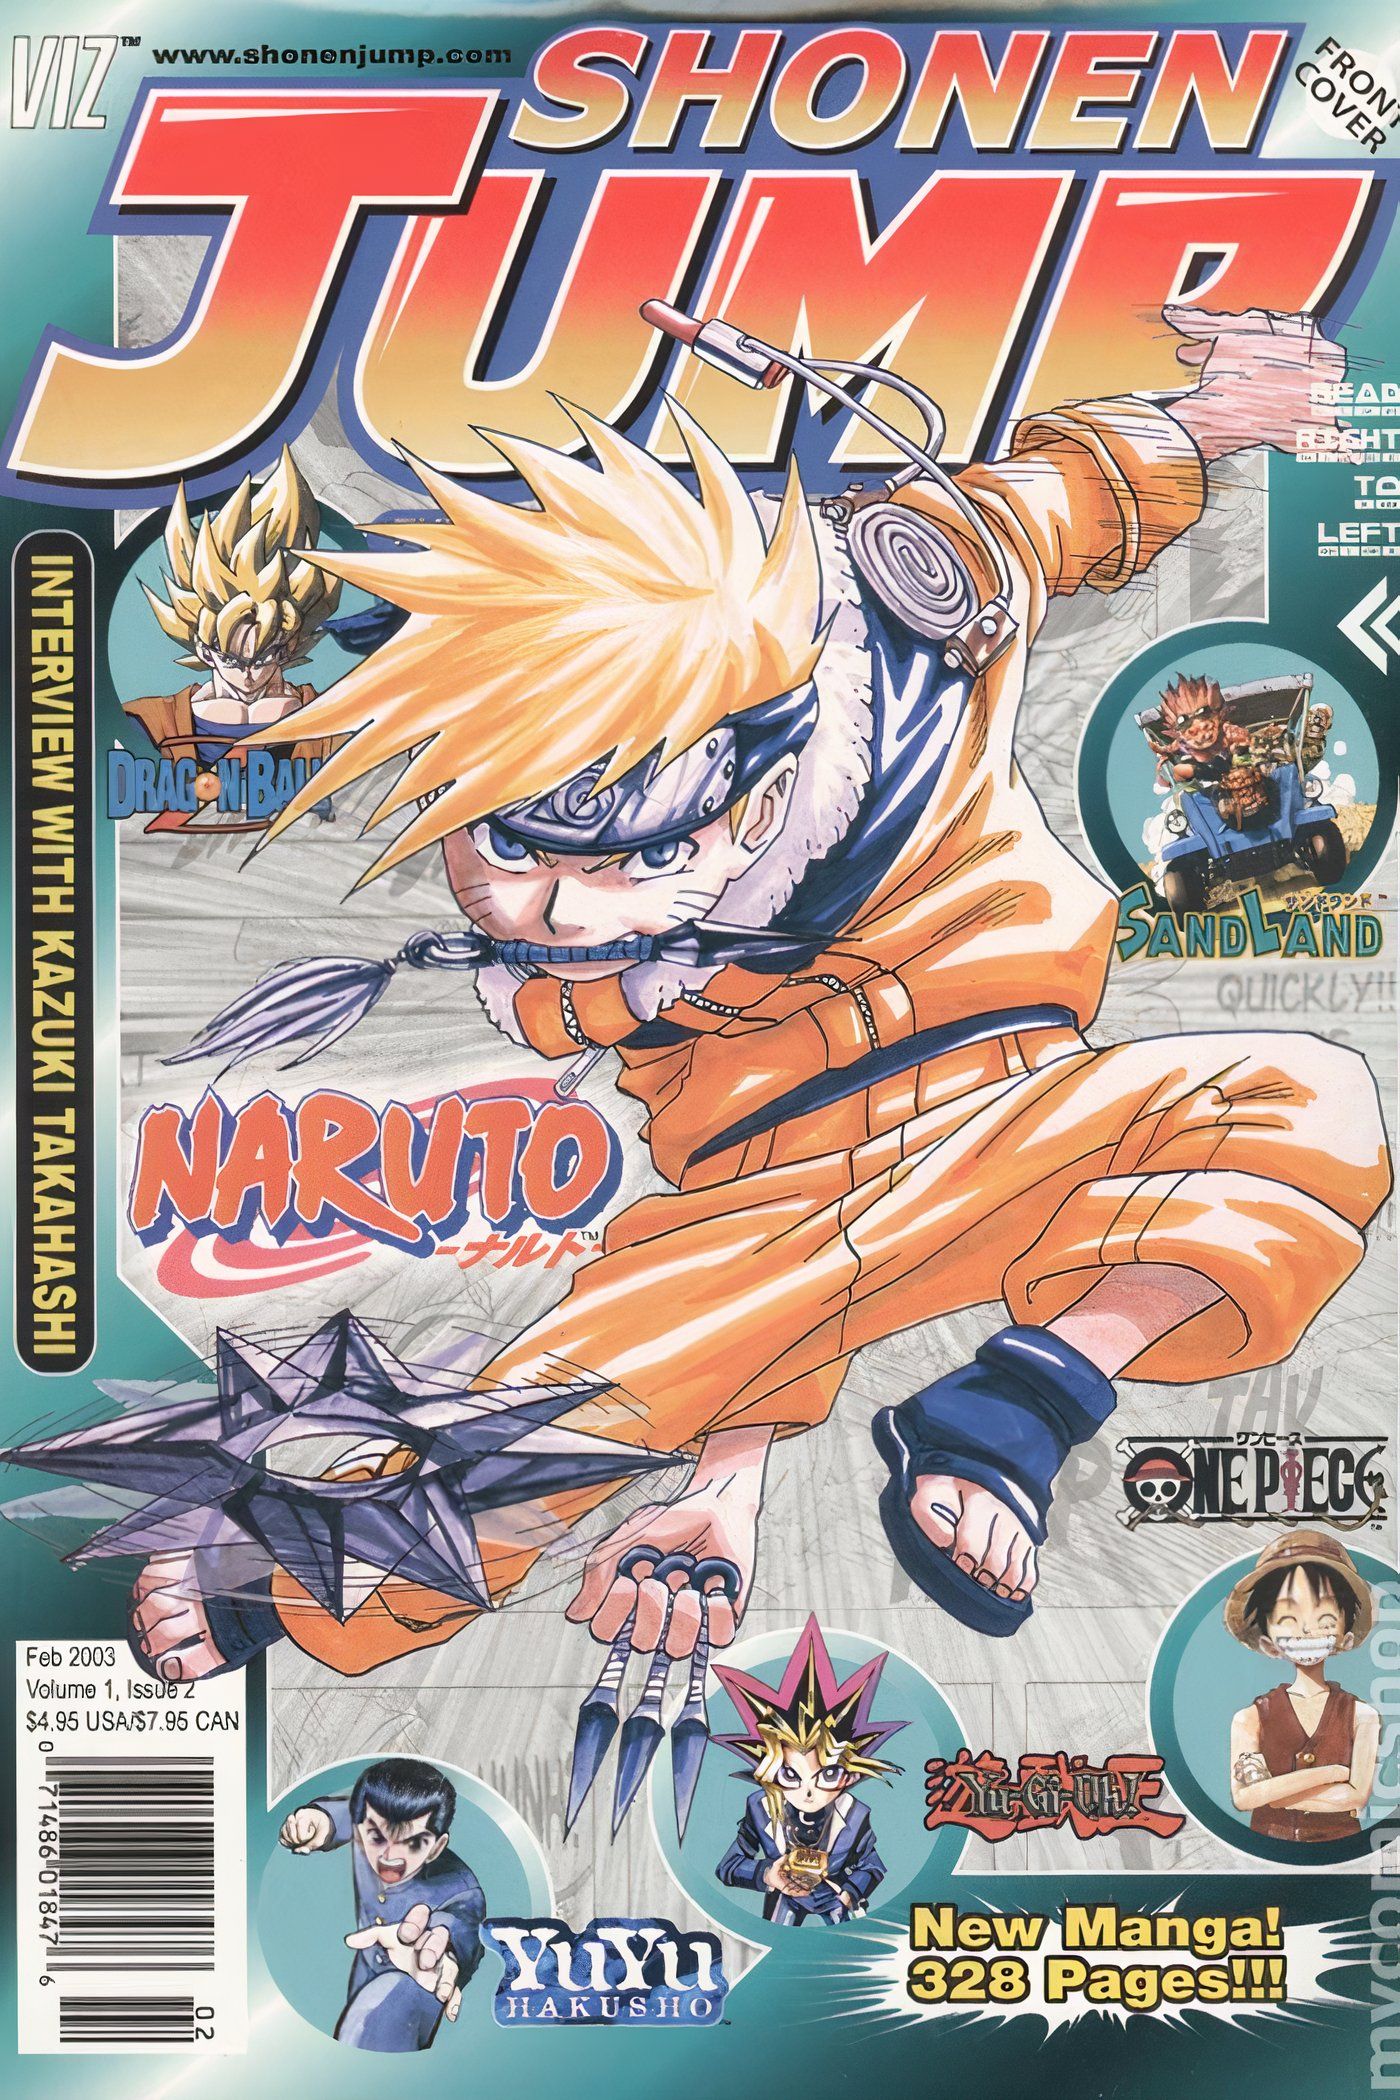 American Weekly Shonen Jump 2 featuring kid Naruto